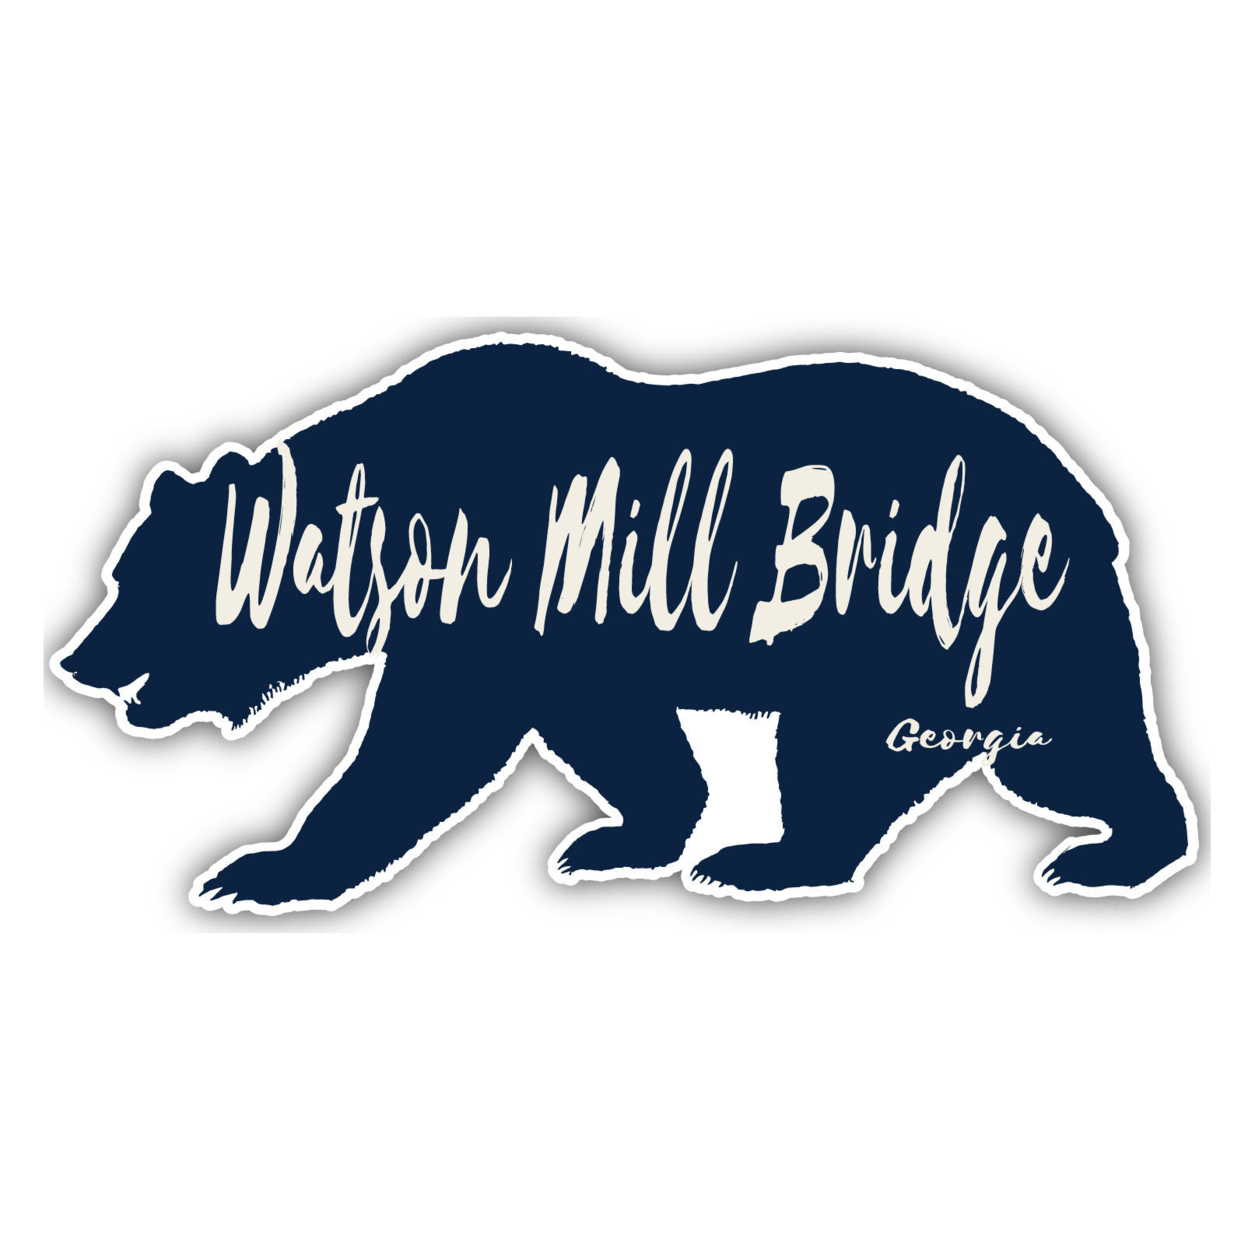 Watson Mill Bridge Georgia Souvenir Decorative Stickers (Choose Theme And Size) - Single Unit, 4-Inch, Bear